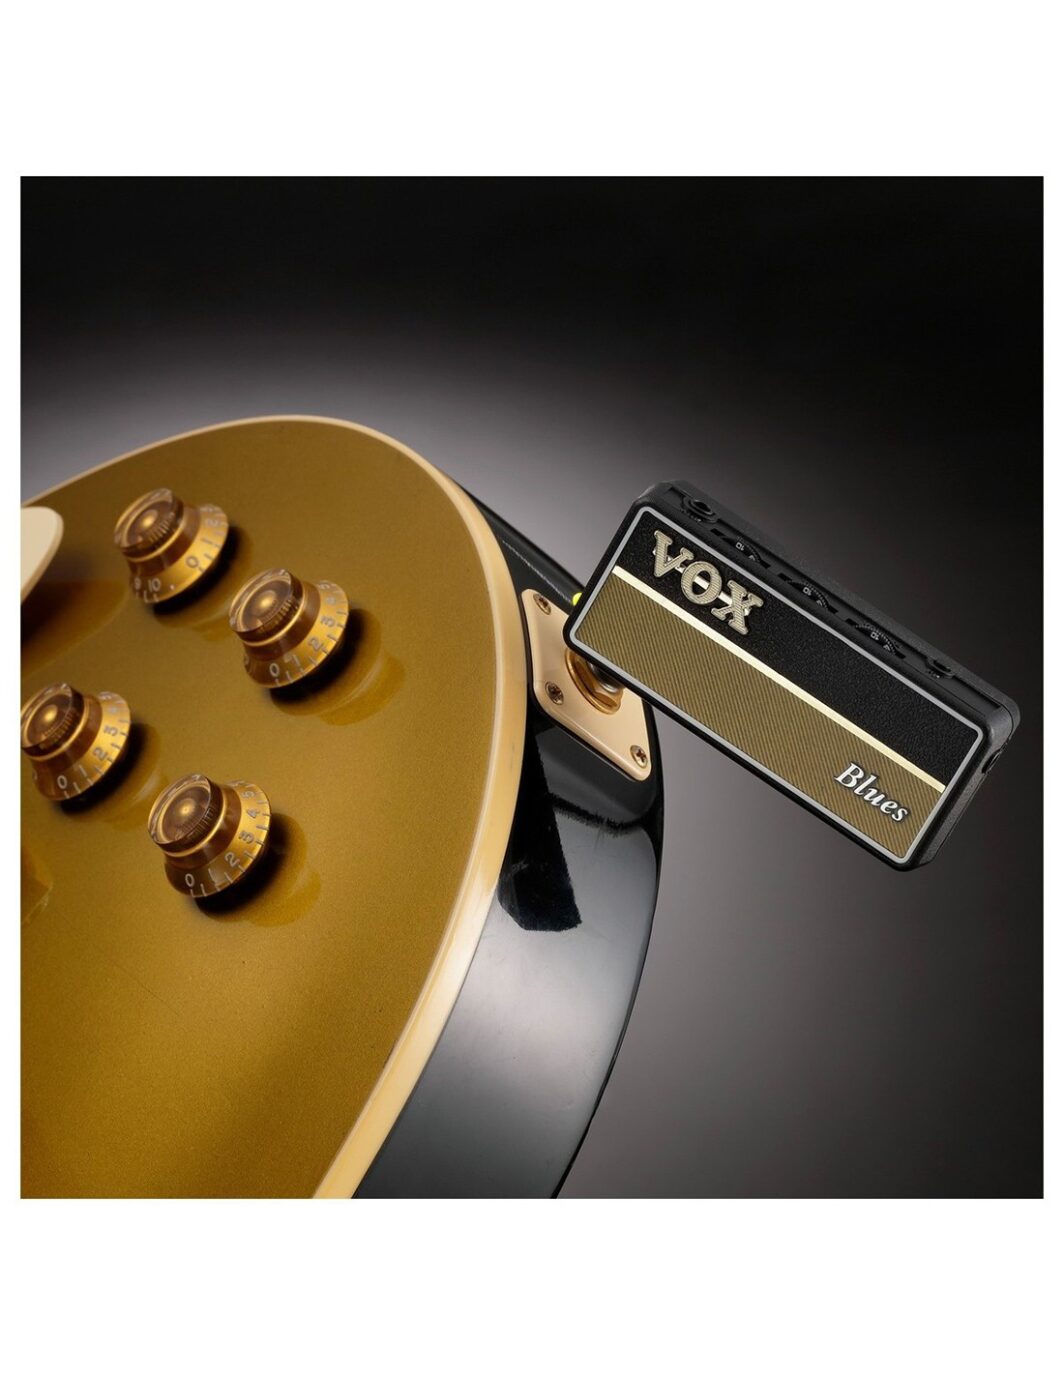 VOX Amplug 2 BLUES Ampli chitarra elettrica